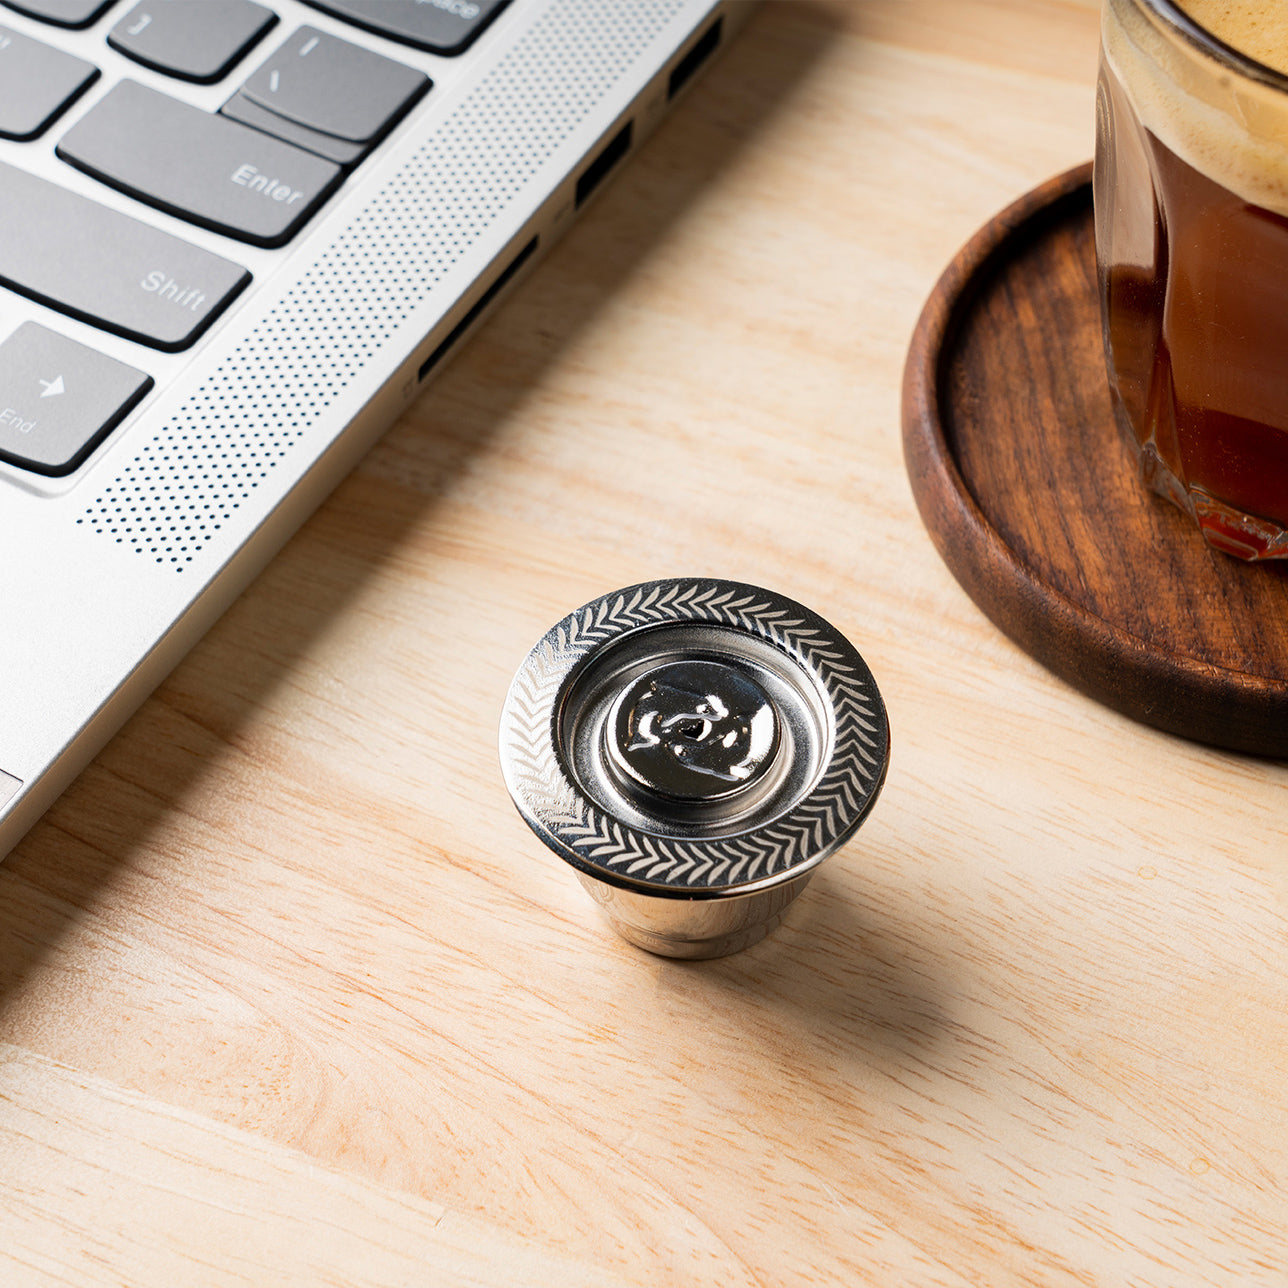 For Nespresso Steel Coffee Capsule, Refillable Reusable Espresso Pods